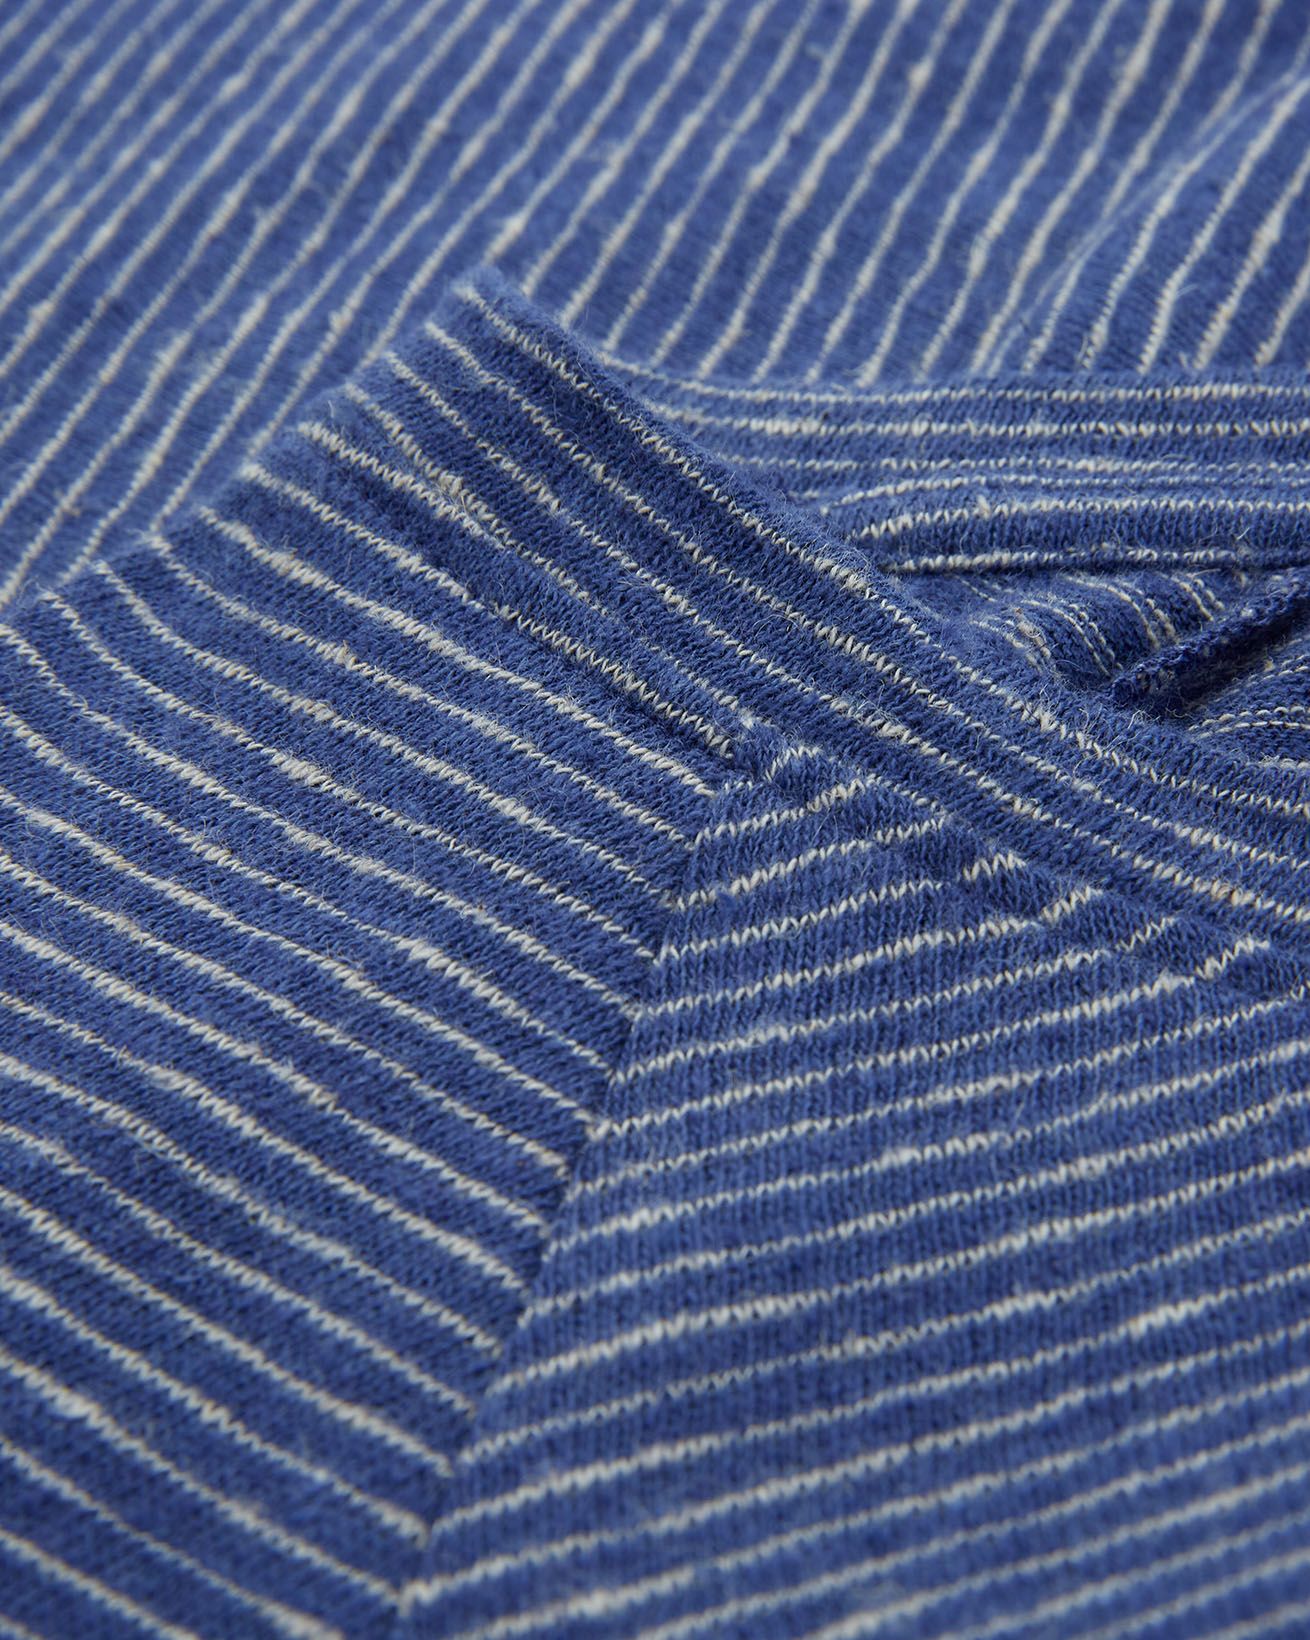 7584_linen-cotton-sweatshirt_blue-ink_microstripe_detail-2 1_web.jpg